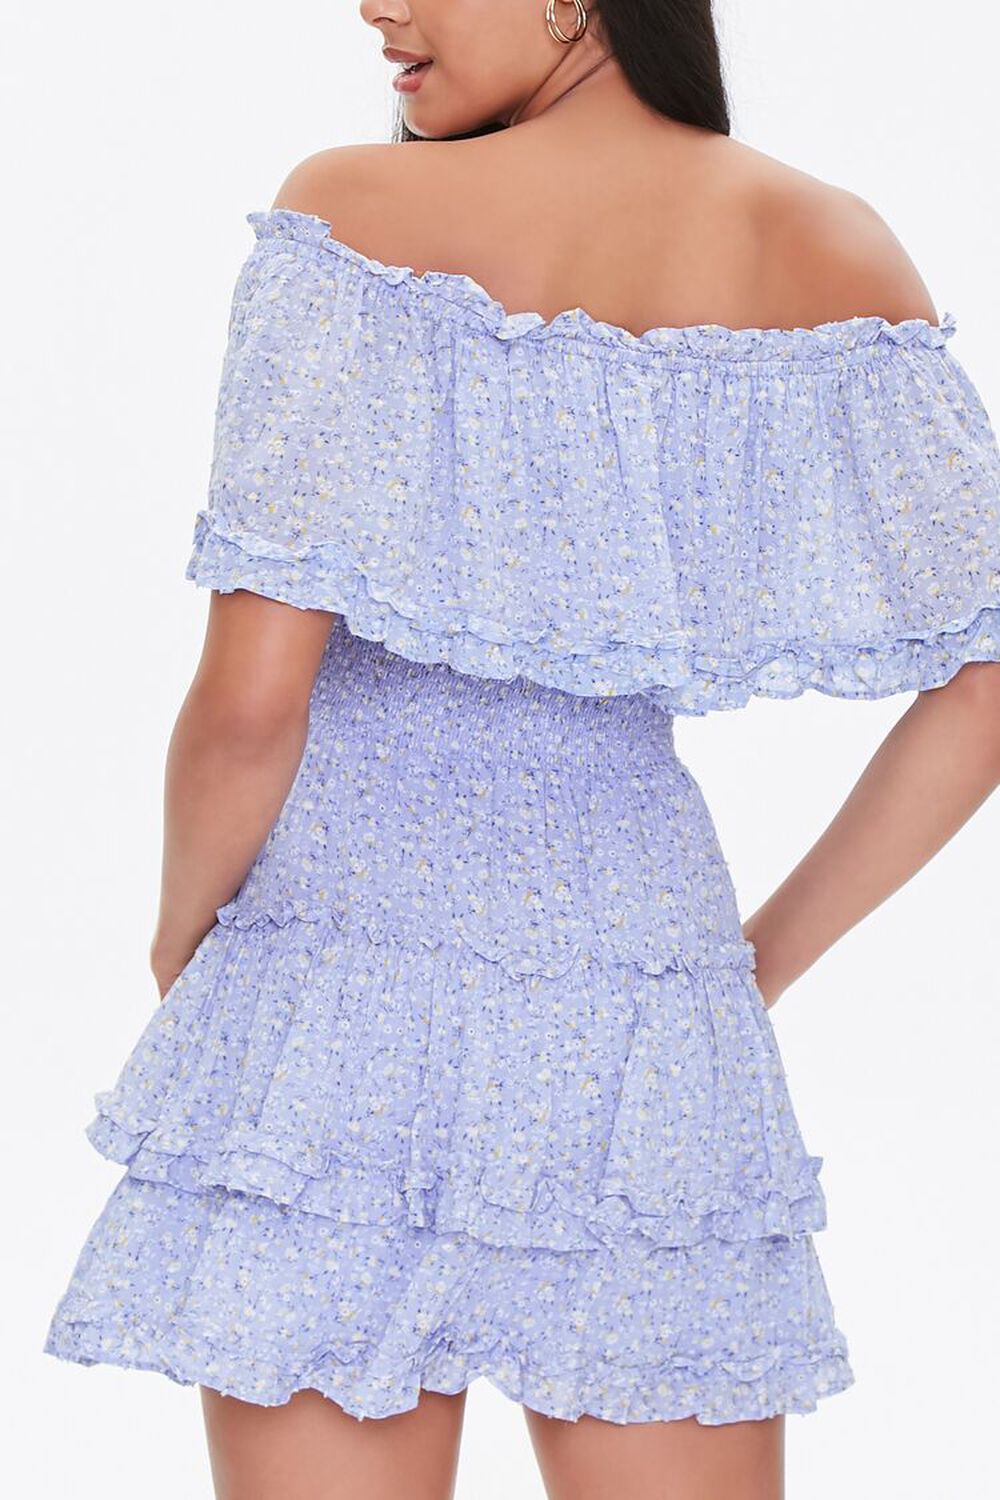 PURPLE/MULTI Off-the-Shoulder Floral Print Dress, image 3